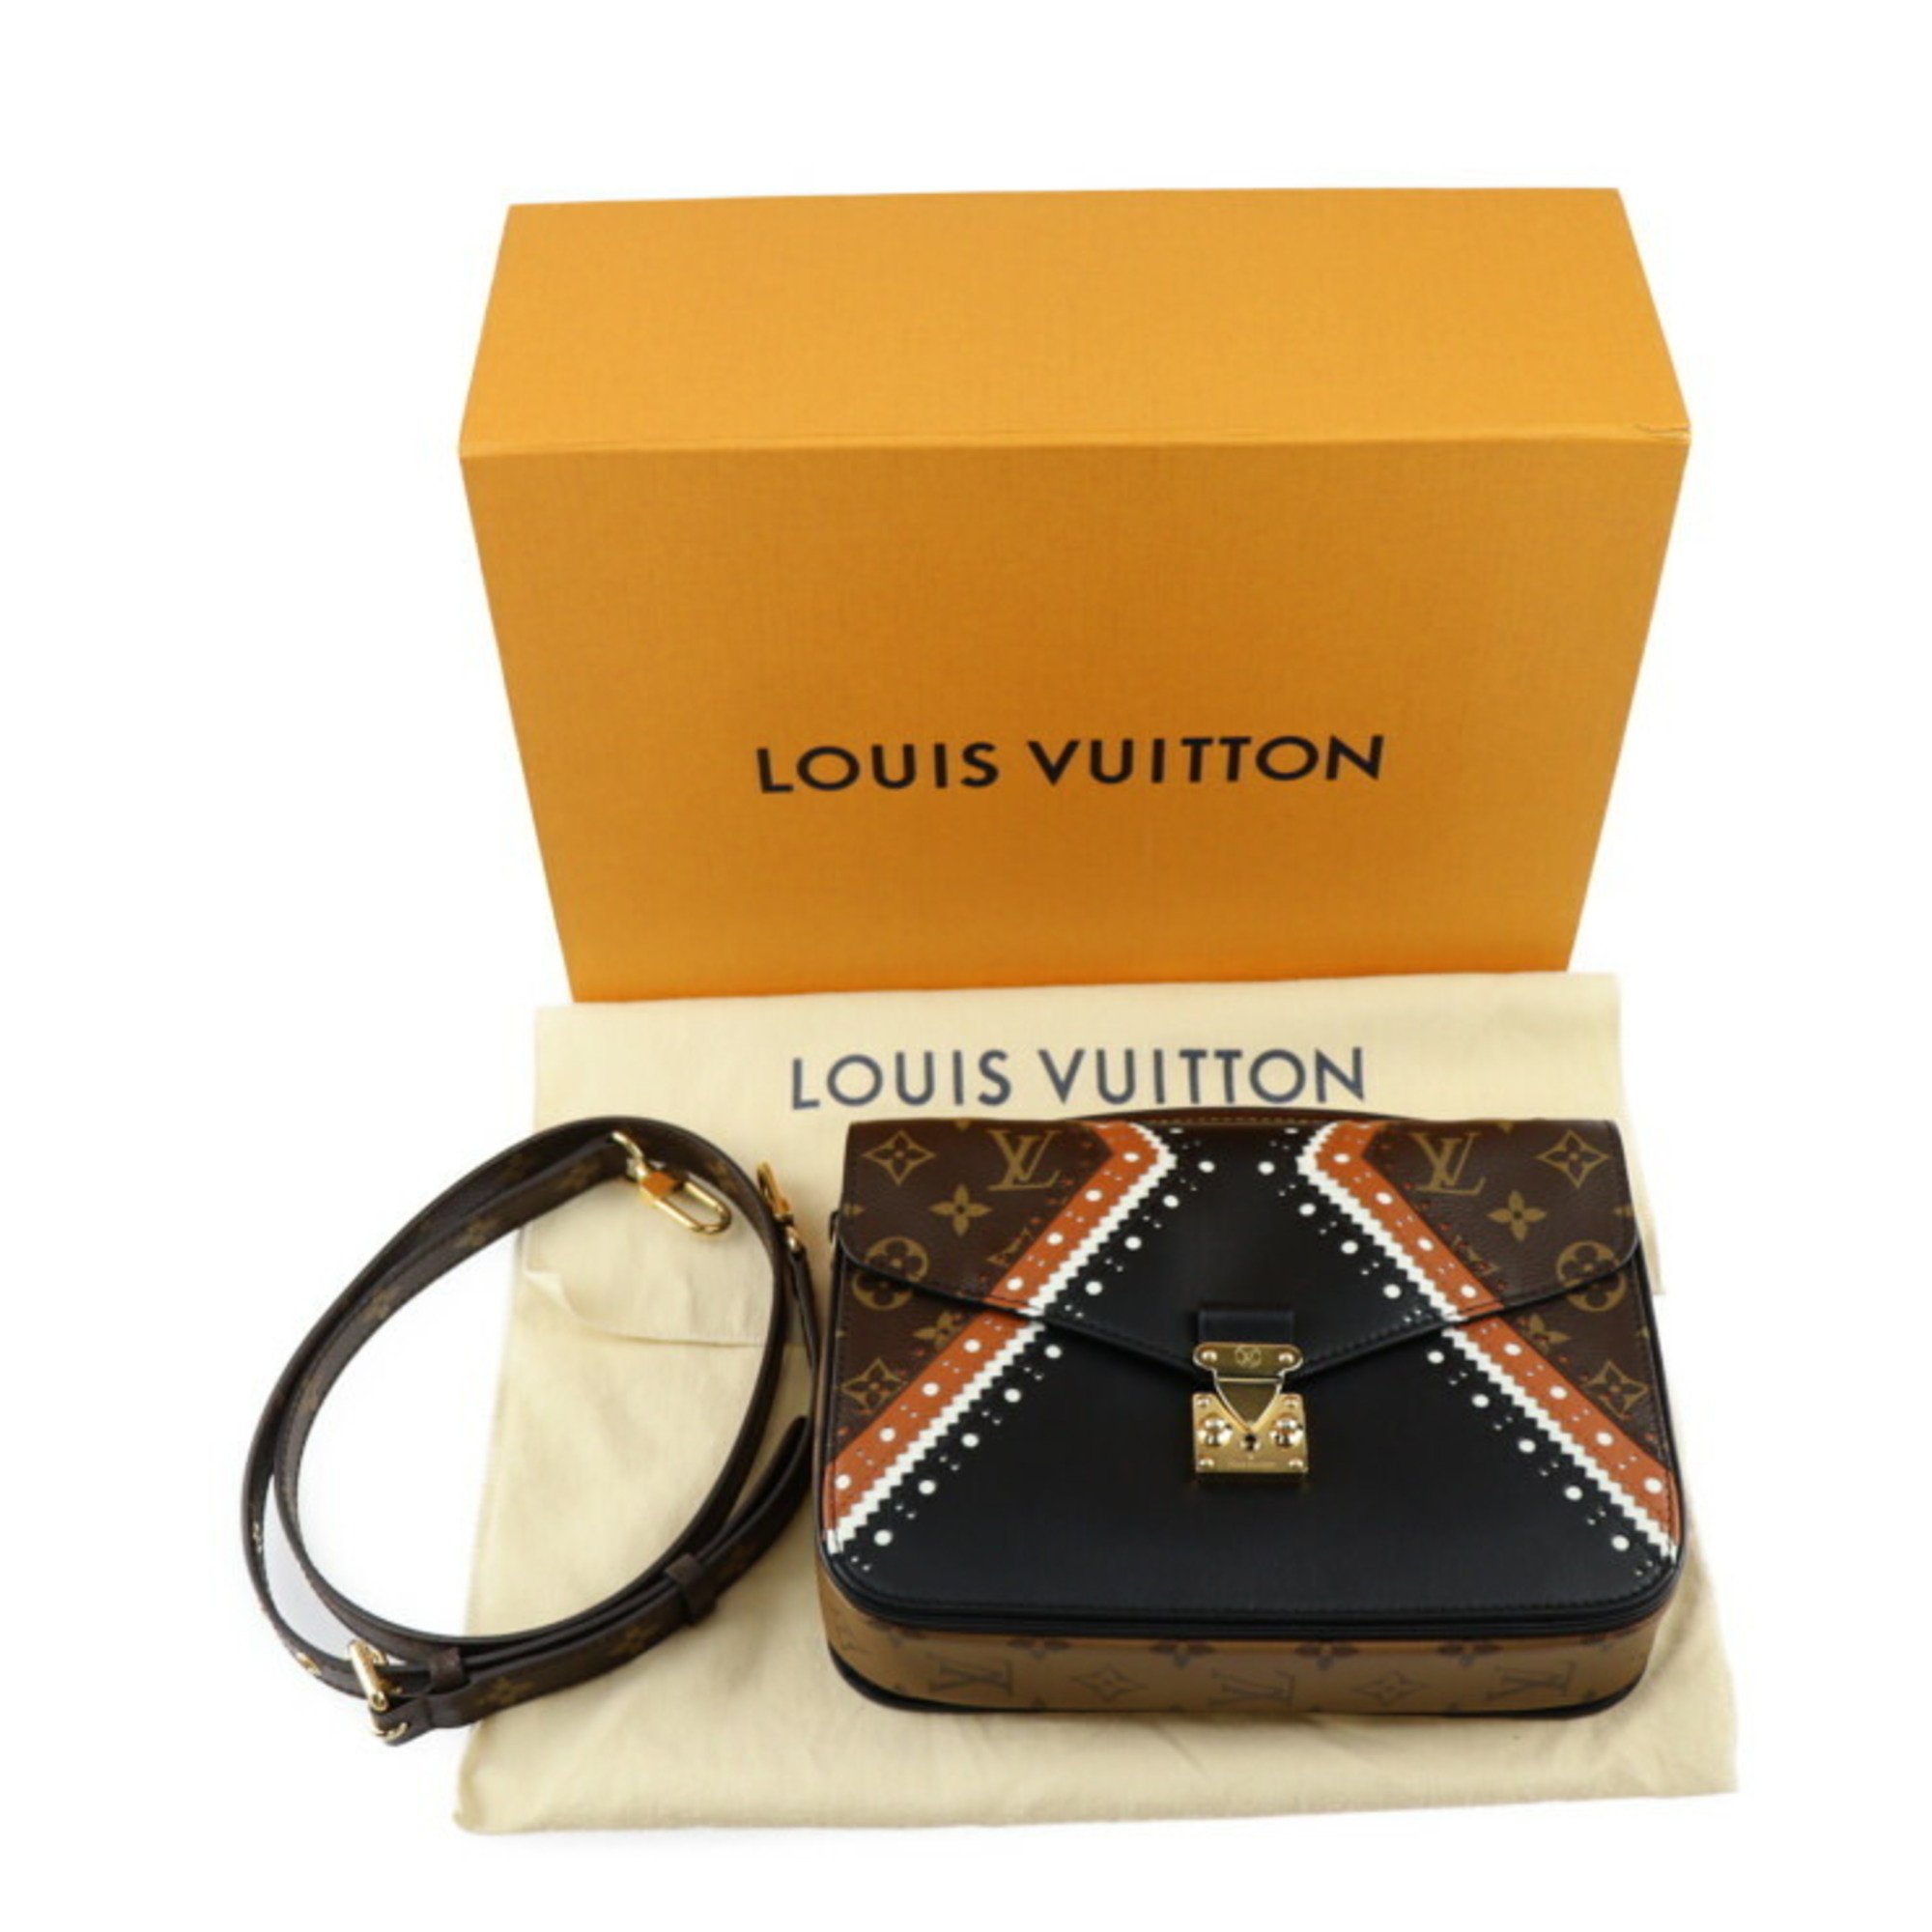 LOUIS VUITTON Louis Vuitton Pochette Metis MM Handbag M43488 Monogram Canvas Reverse Brown Black Gold Hardware 2WAY Shoulder Bag Giant